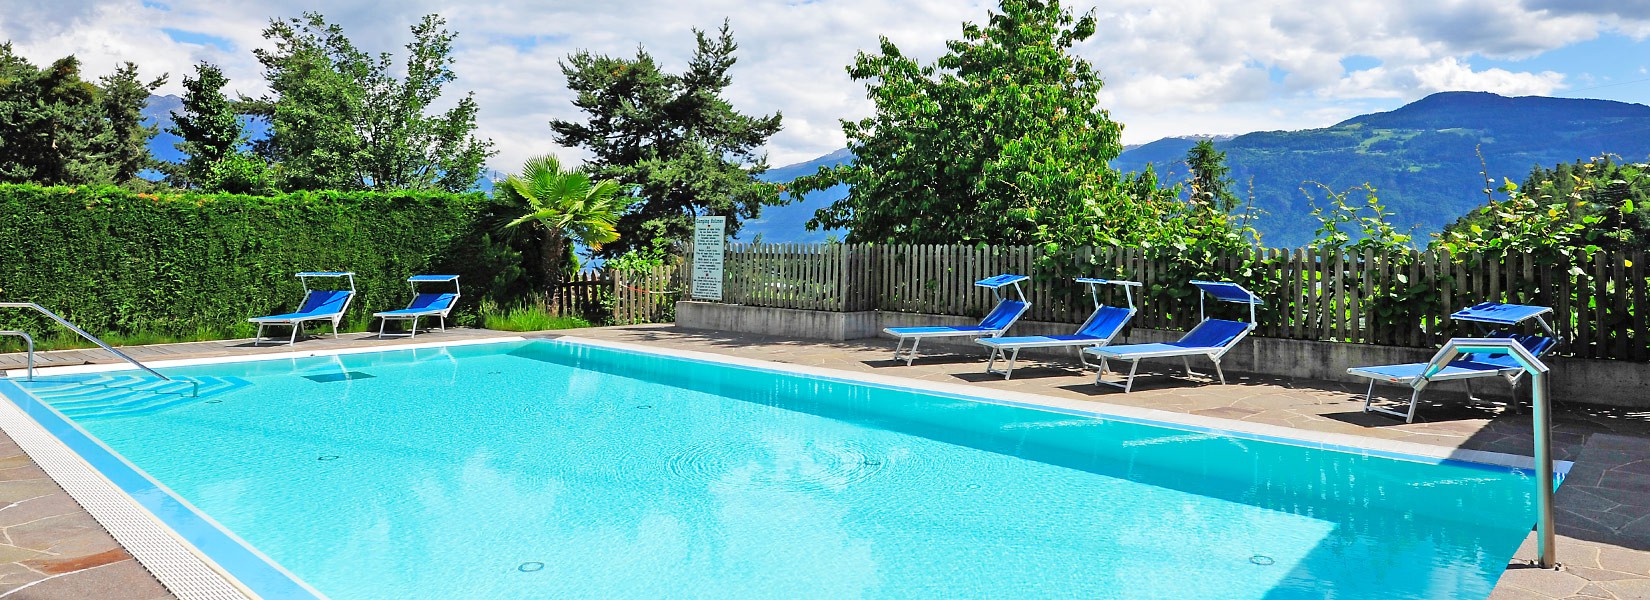 Camping met zwembad in Lana, Trentino Alto Adige